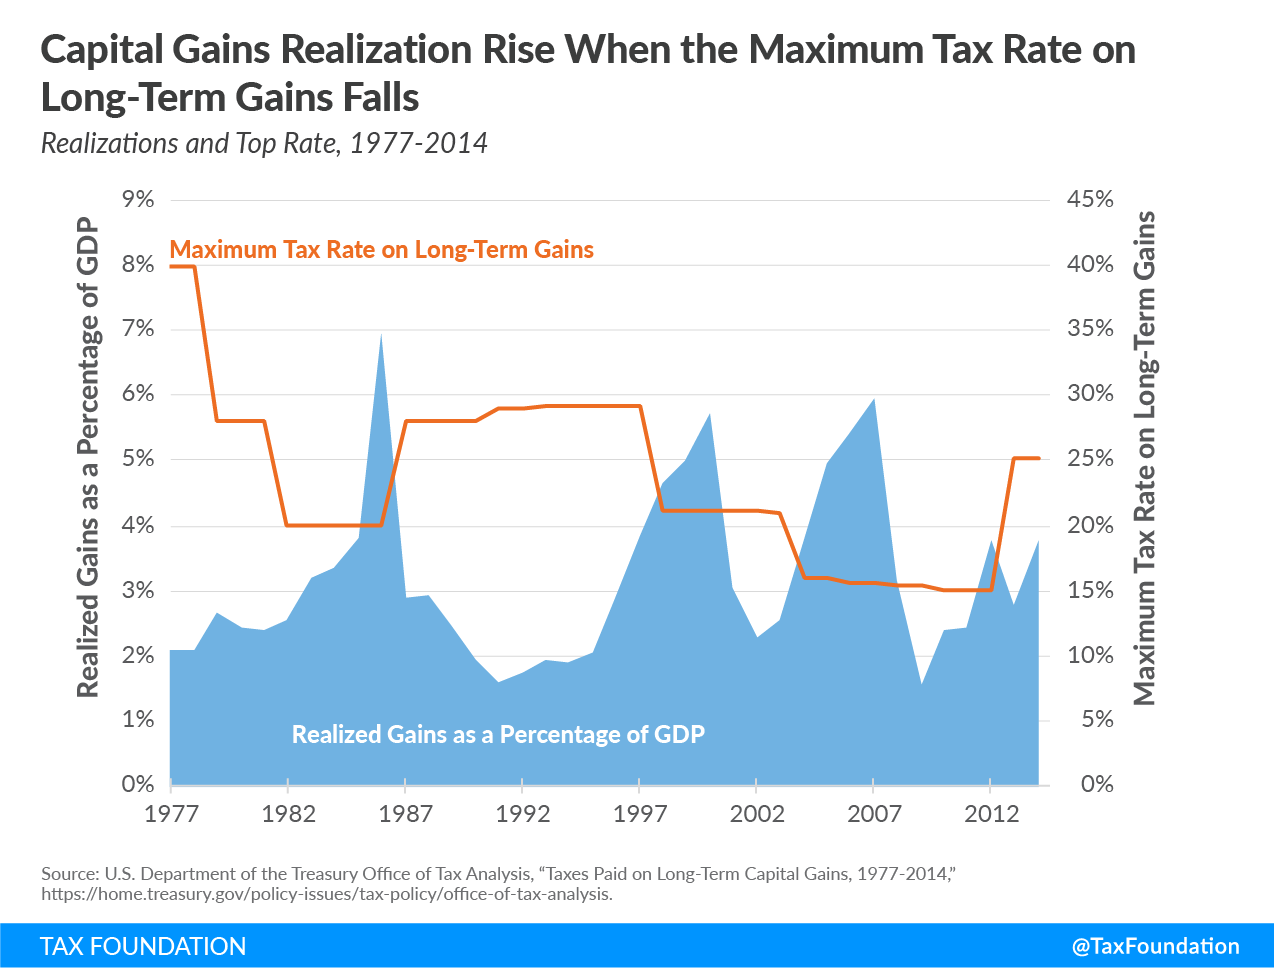 Capital gains realization rise when maximum tax rate on long-term gains falls